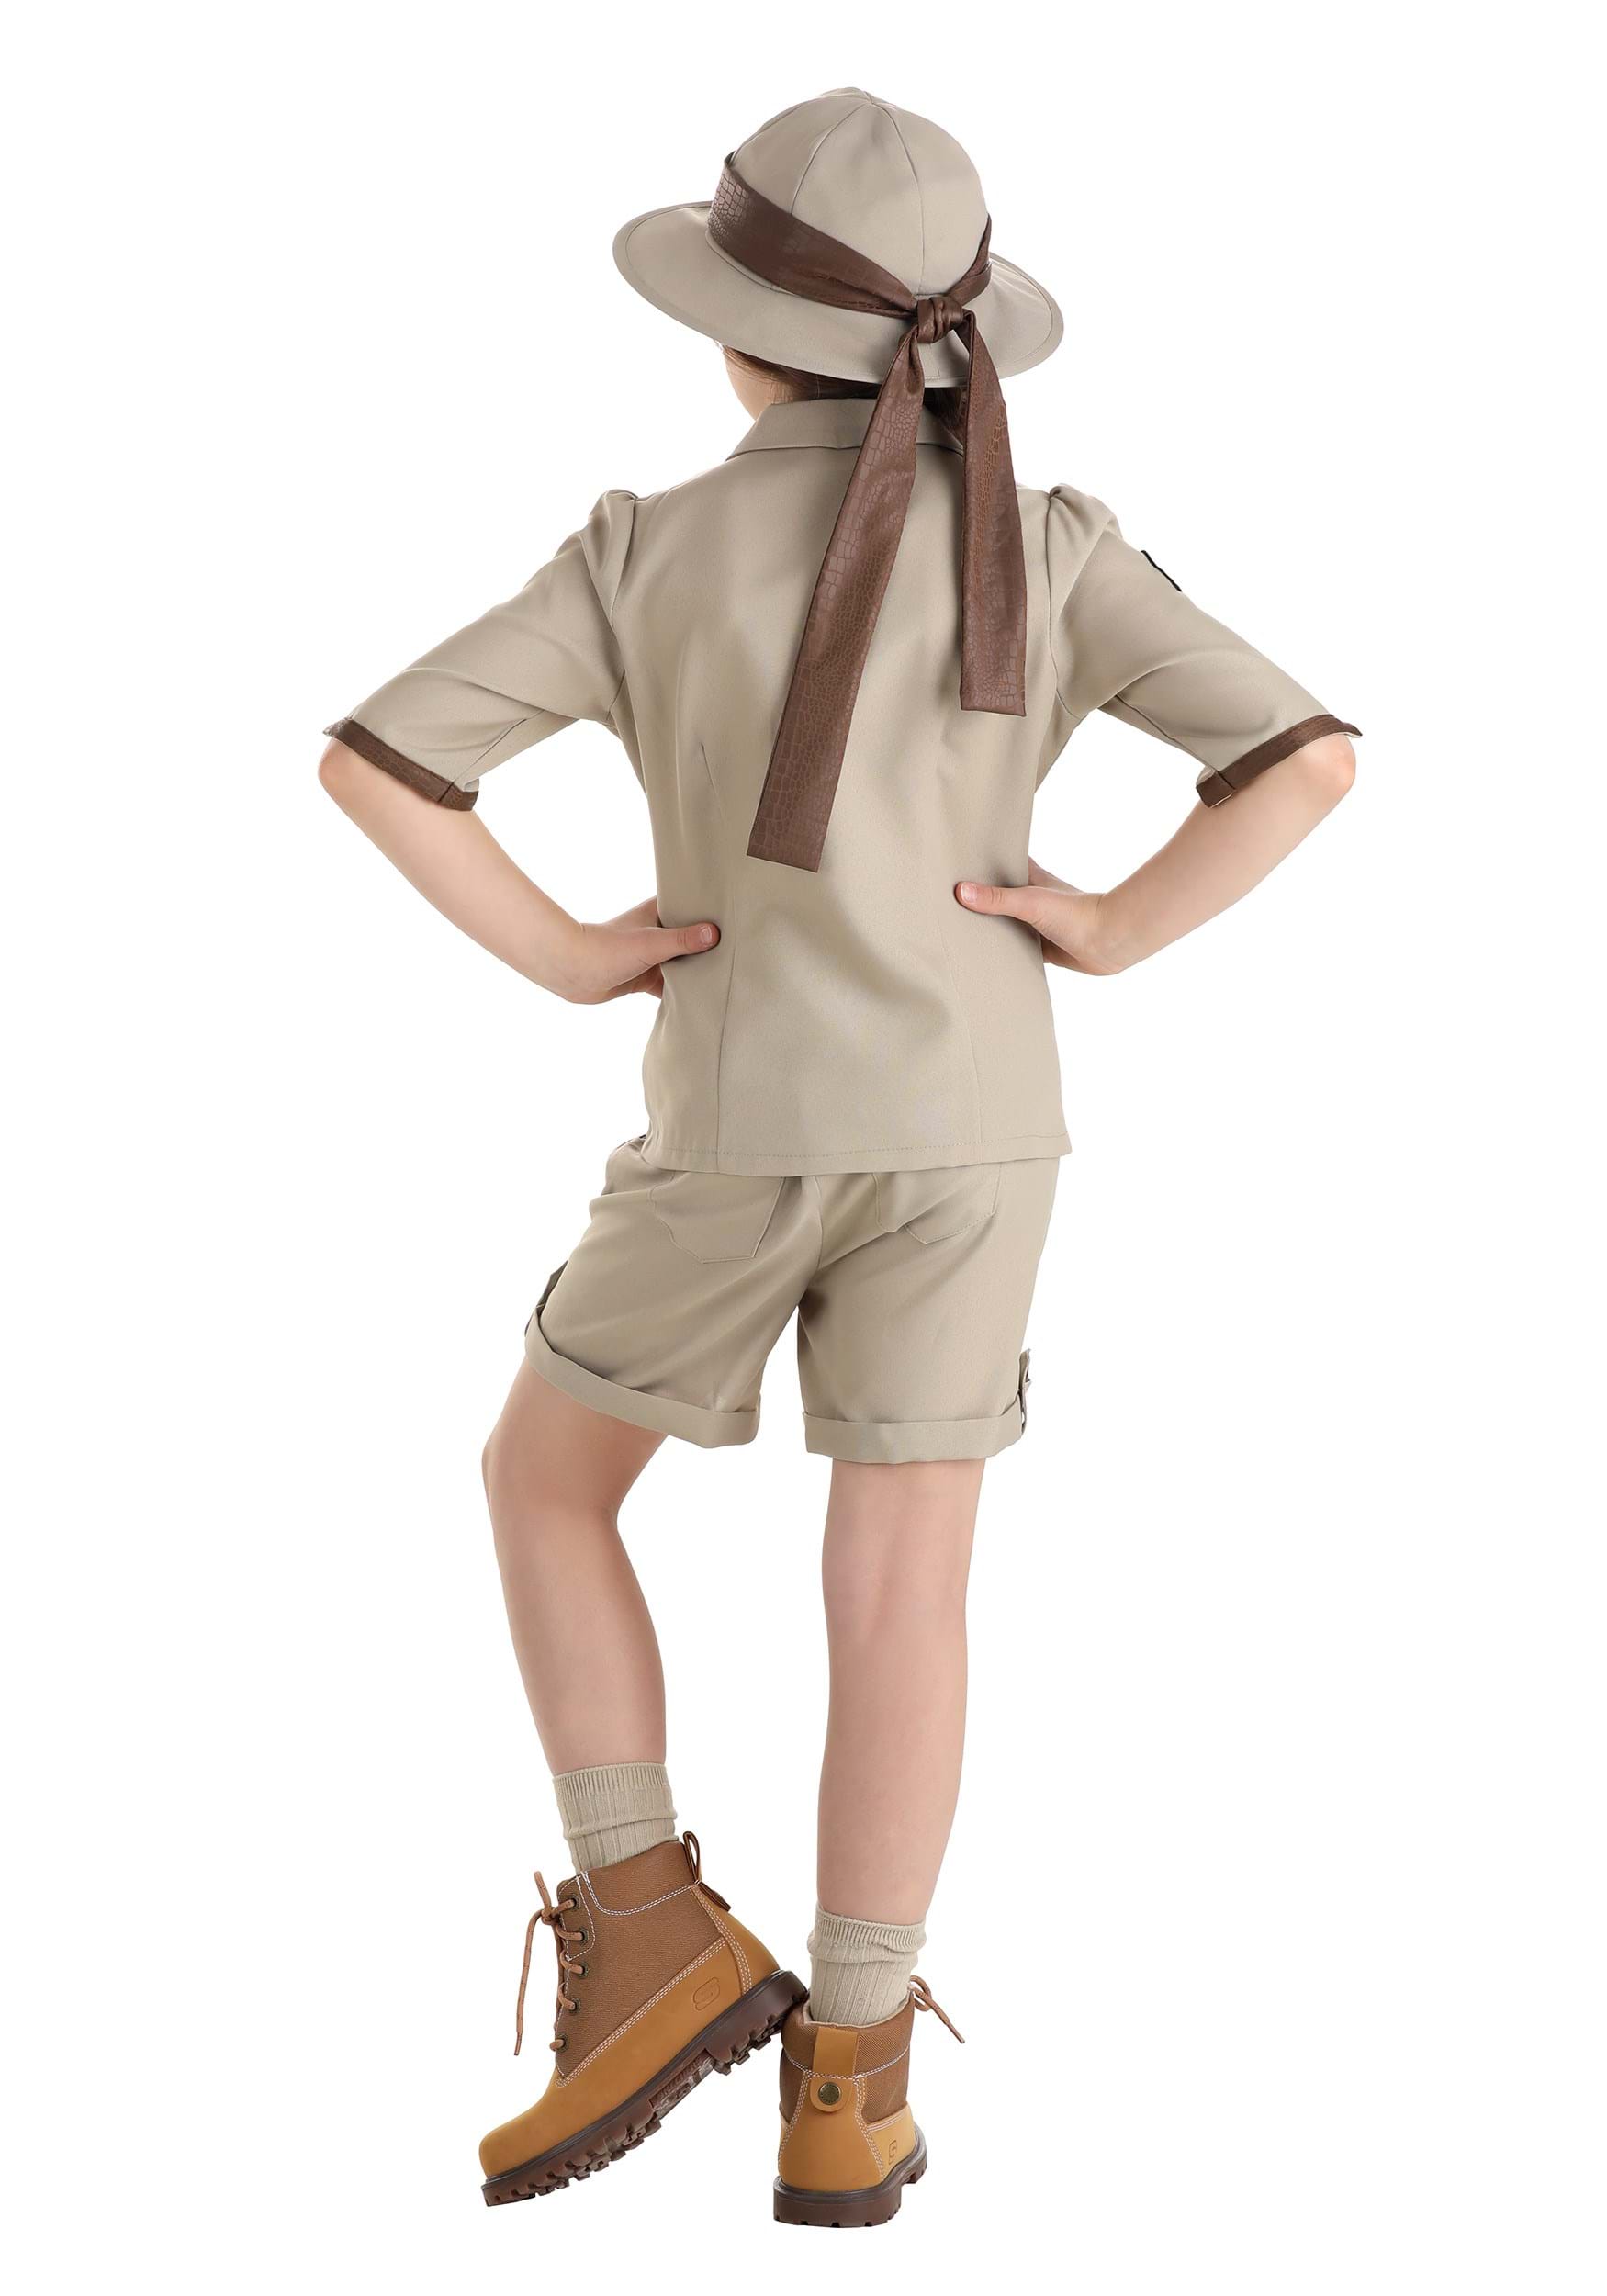 Paleontologist Costume For Kid's